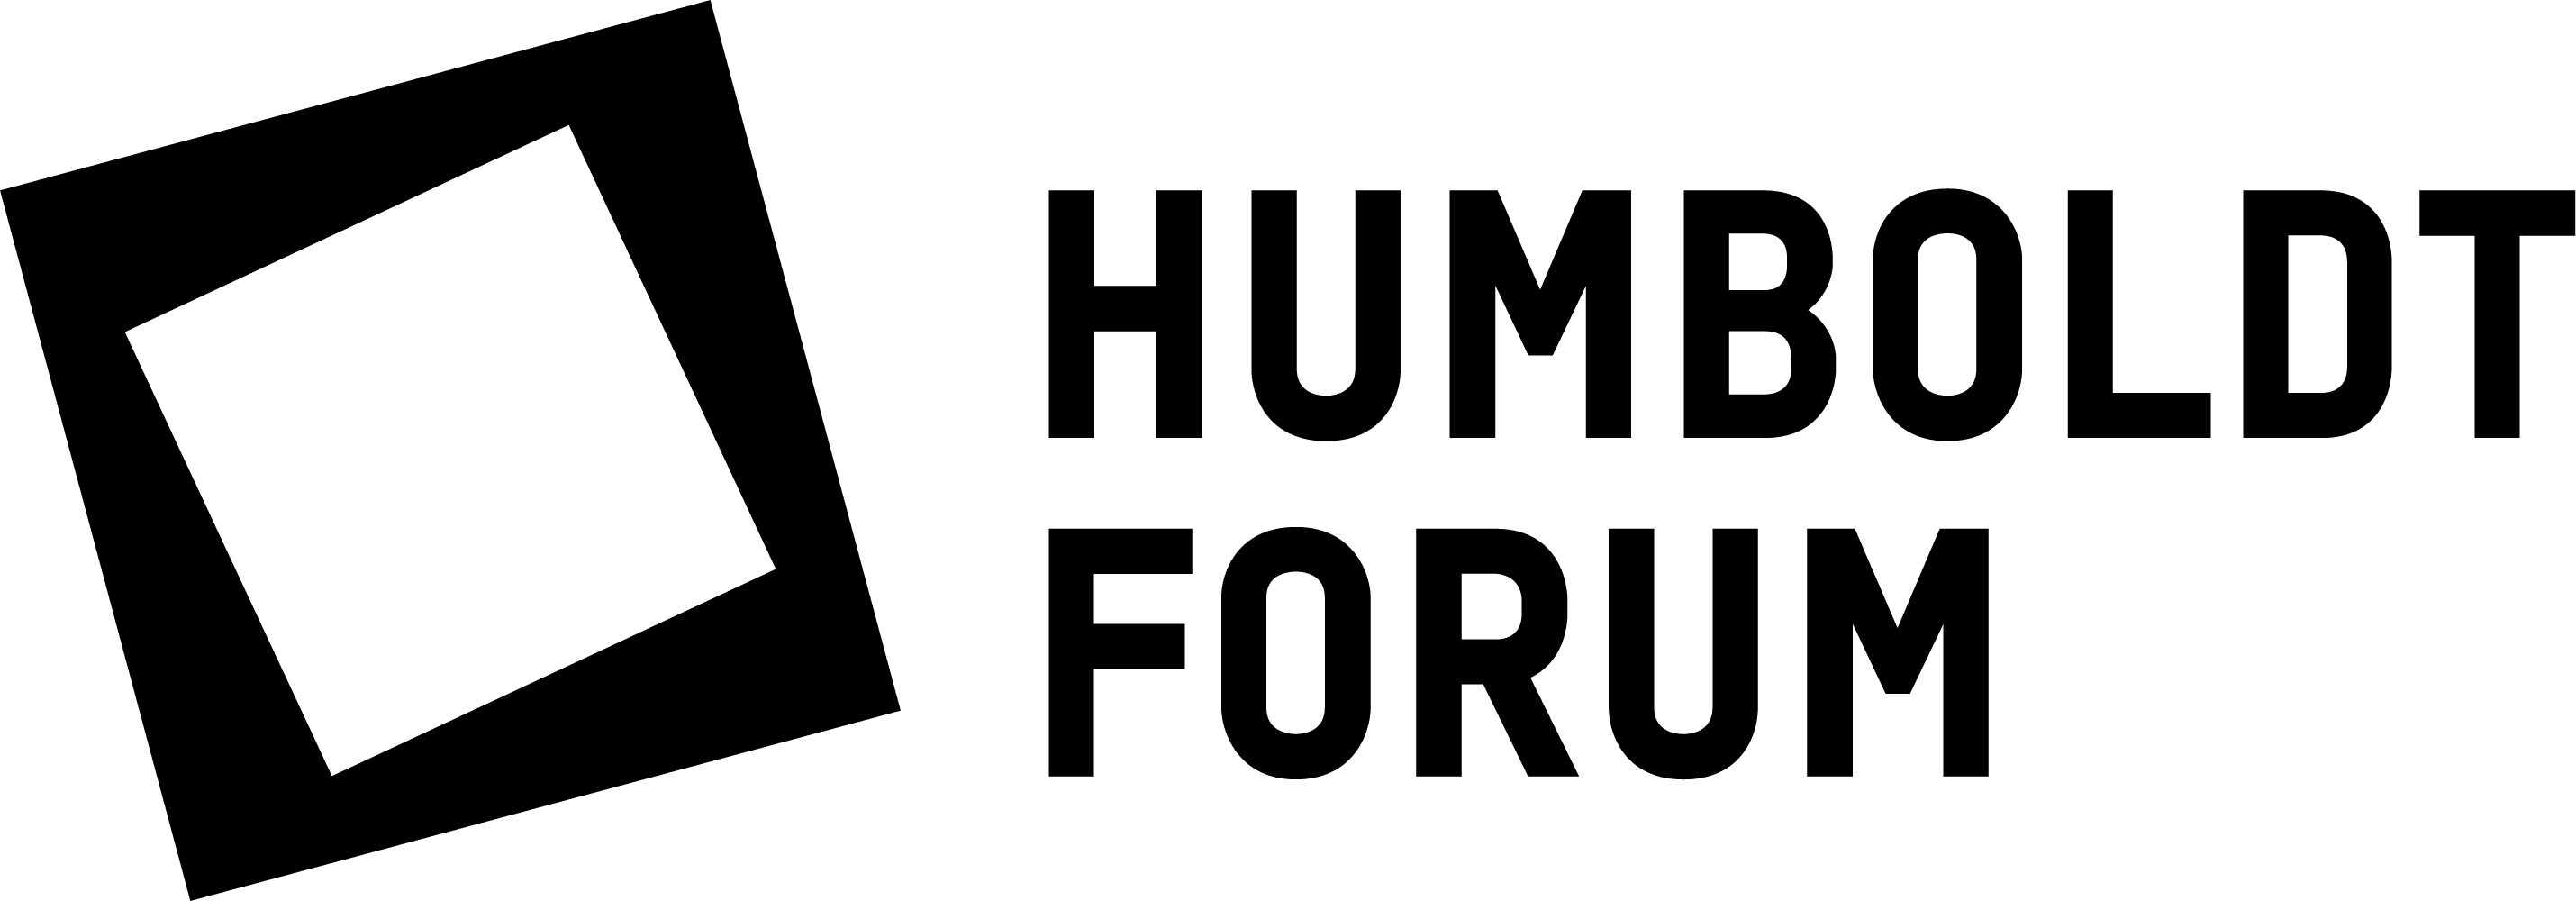 Humboldt Forum-logo